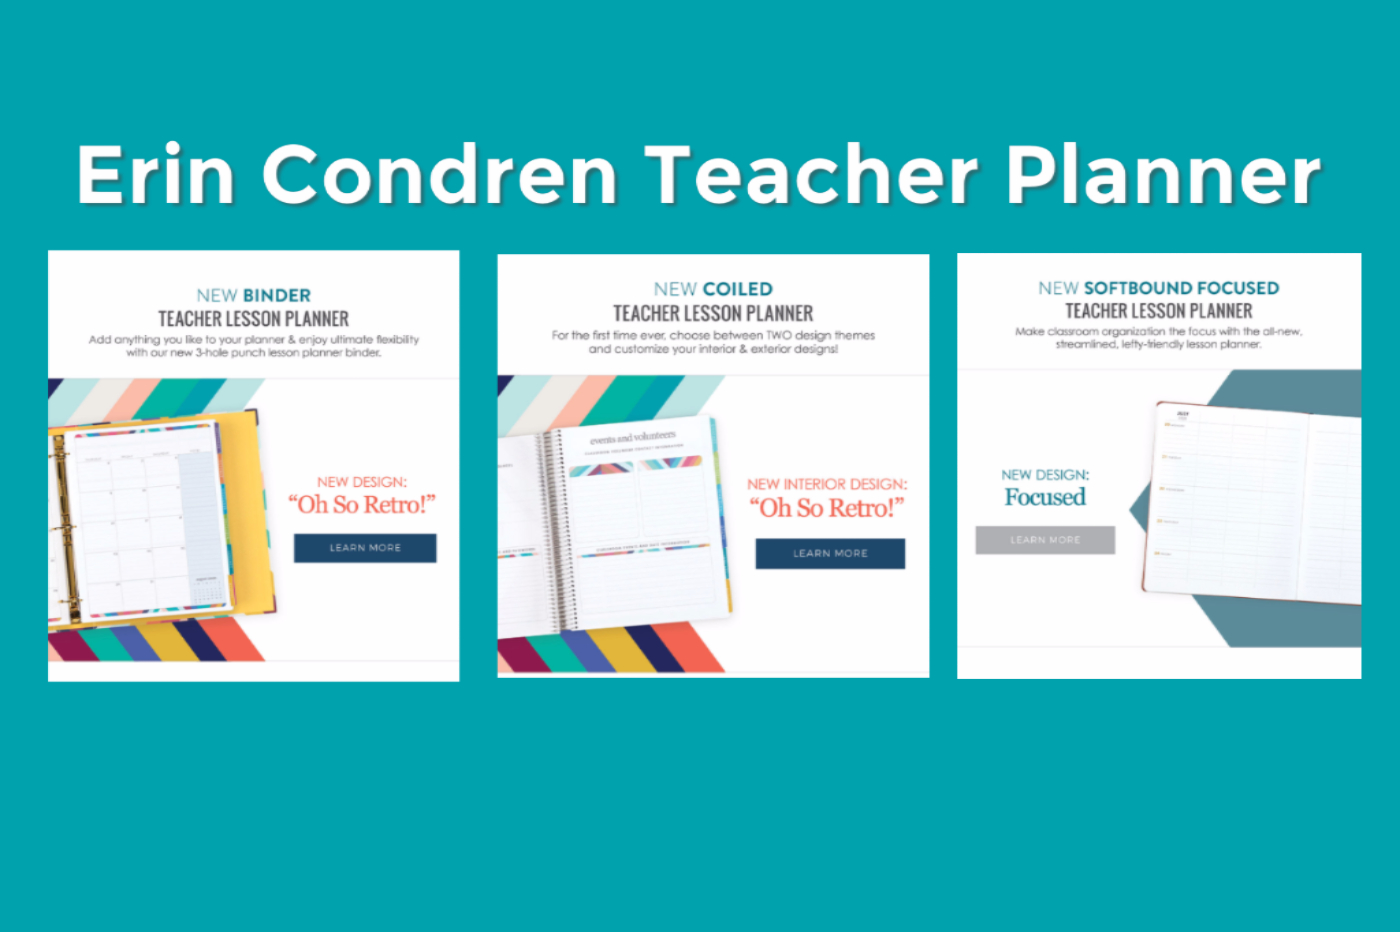 Erin Condren Teacher Planner